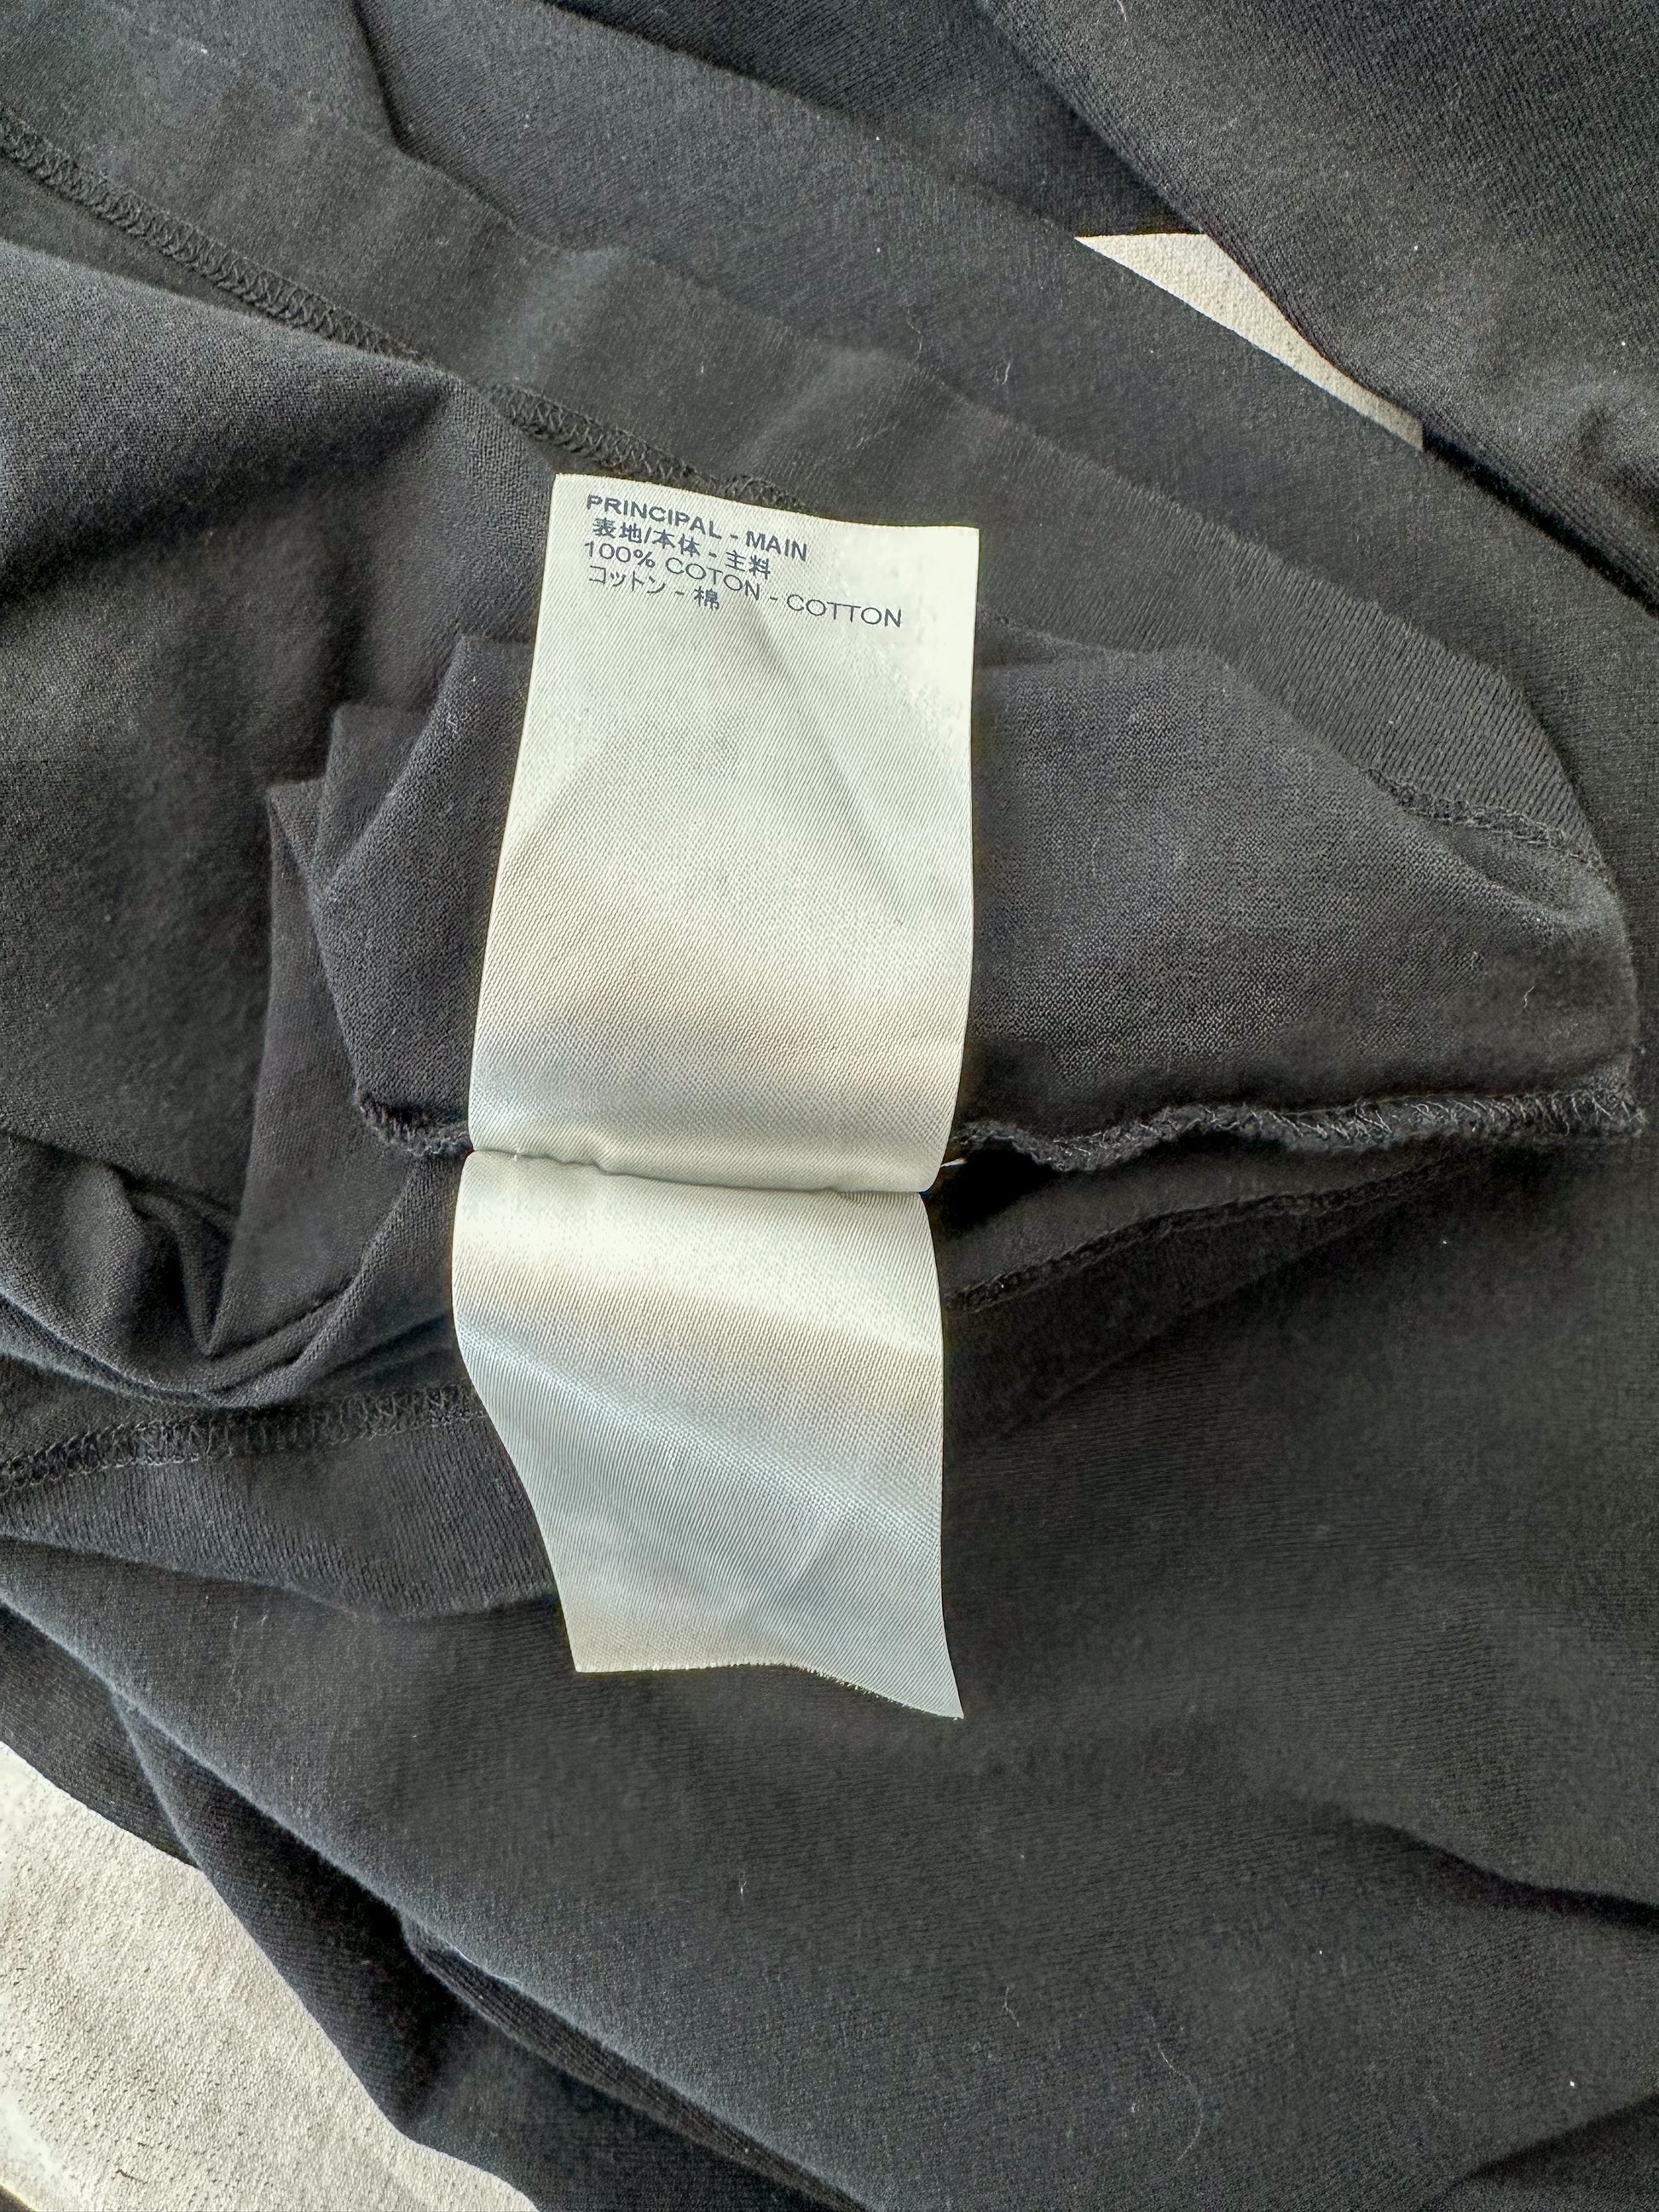 Louis Vuitton Black Striped Longsleeve T-Shirt